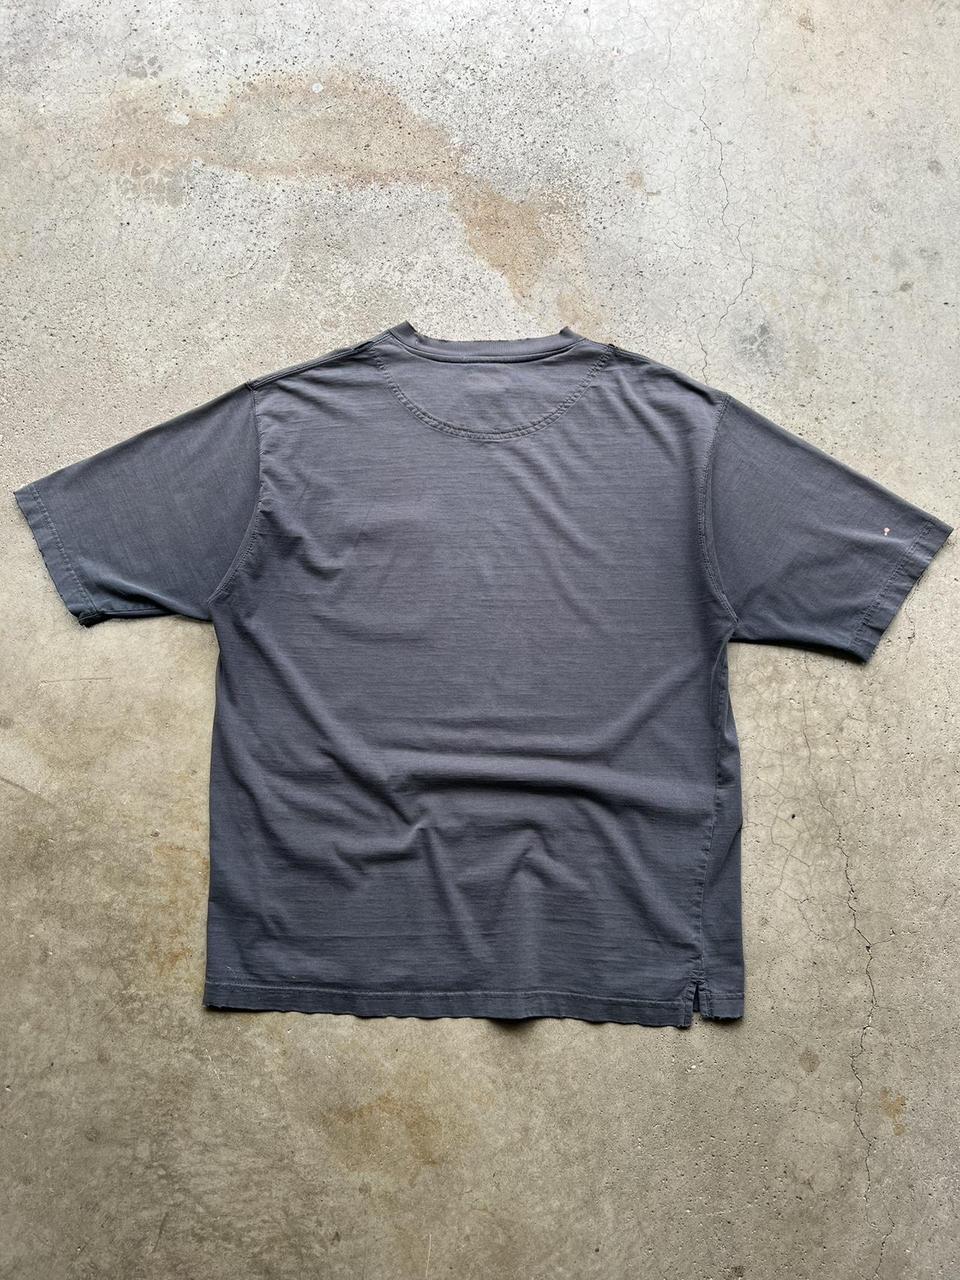 Alpine Design Men's Black T-shirt (2)